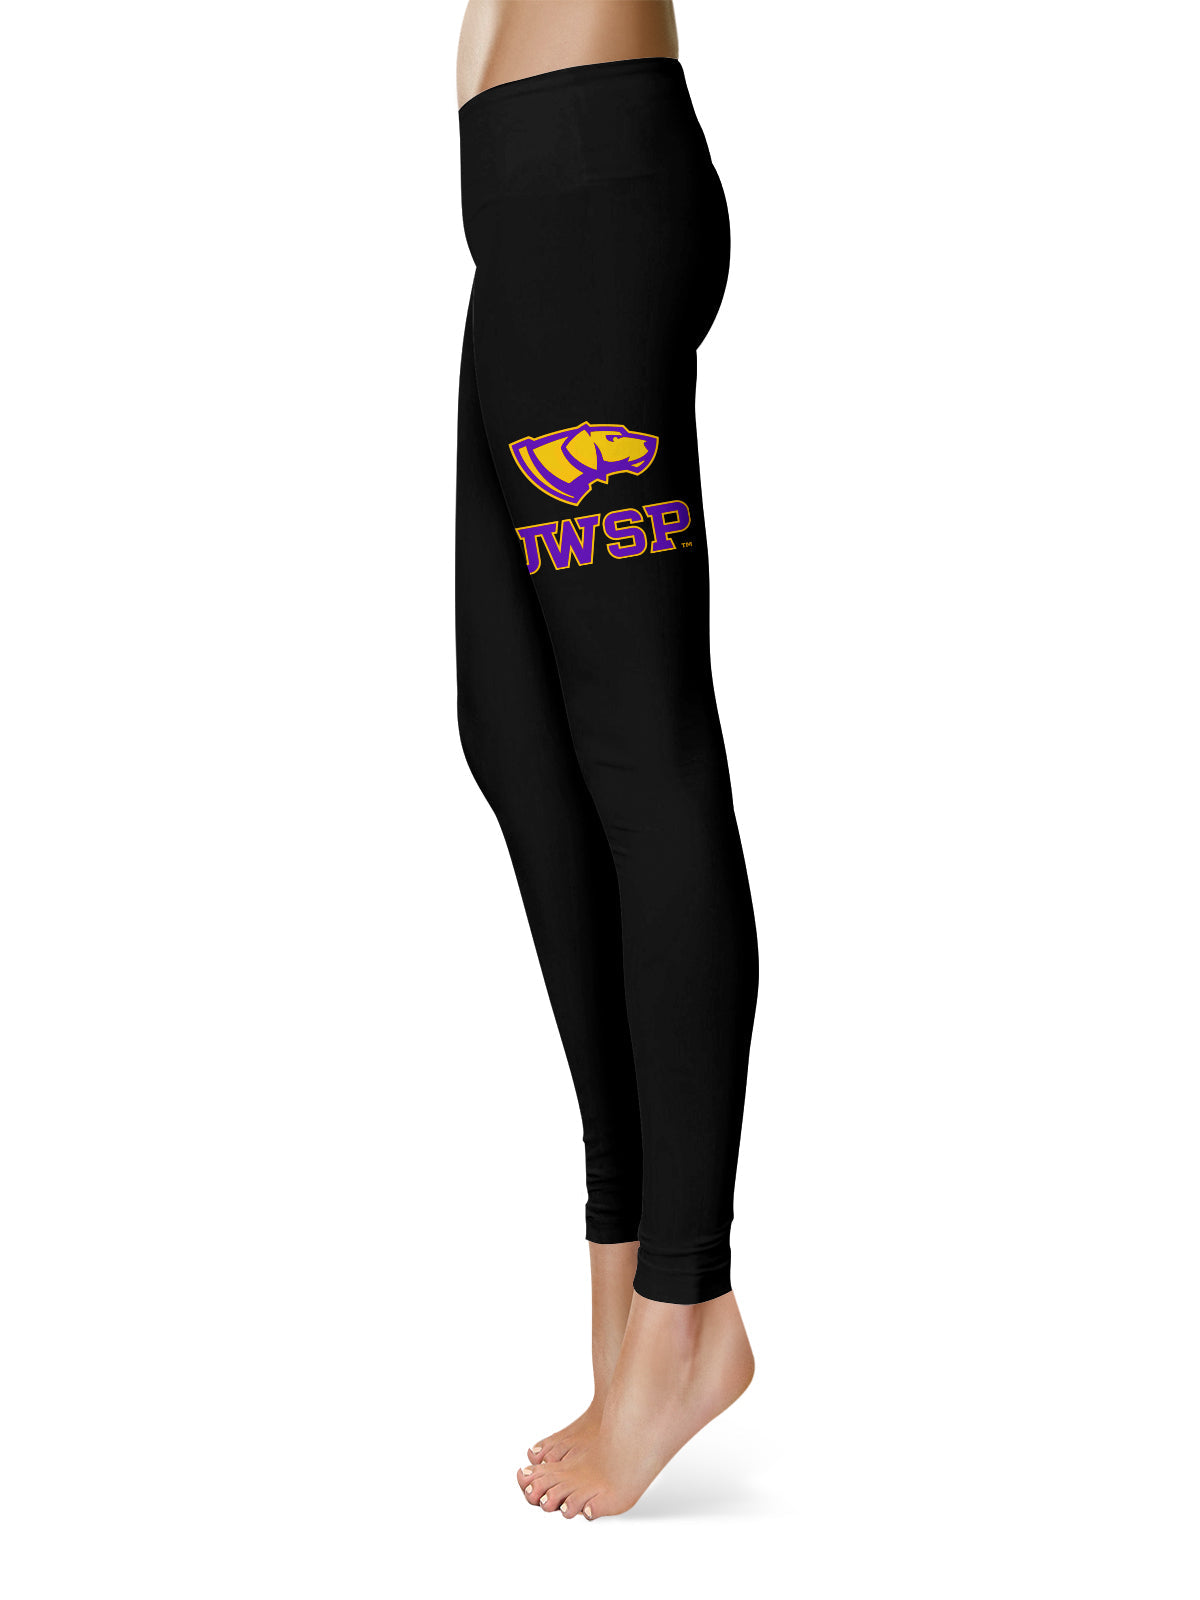 UW-Stevens Point Pointers UWSP Vive La Fete Collegiate Large Logo on Thigh Women Black Yoga Leggings 2.5 Waist Tights